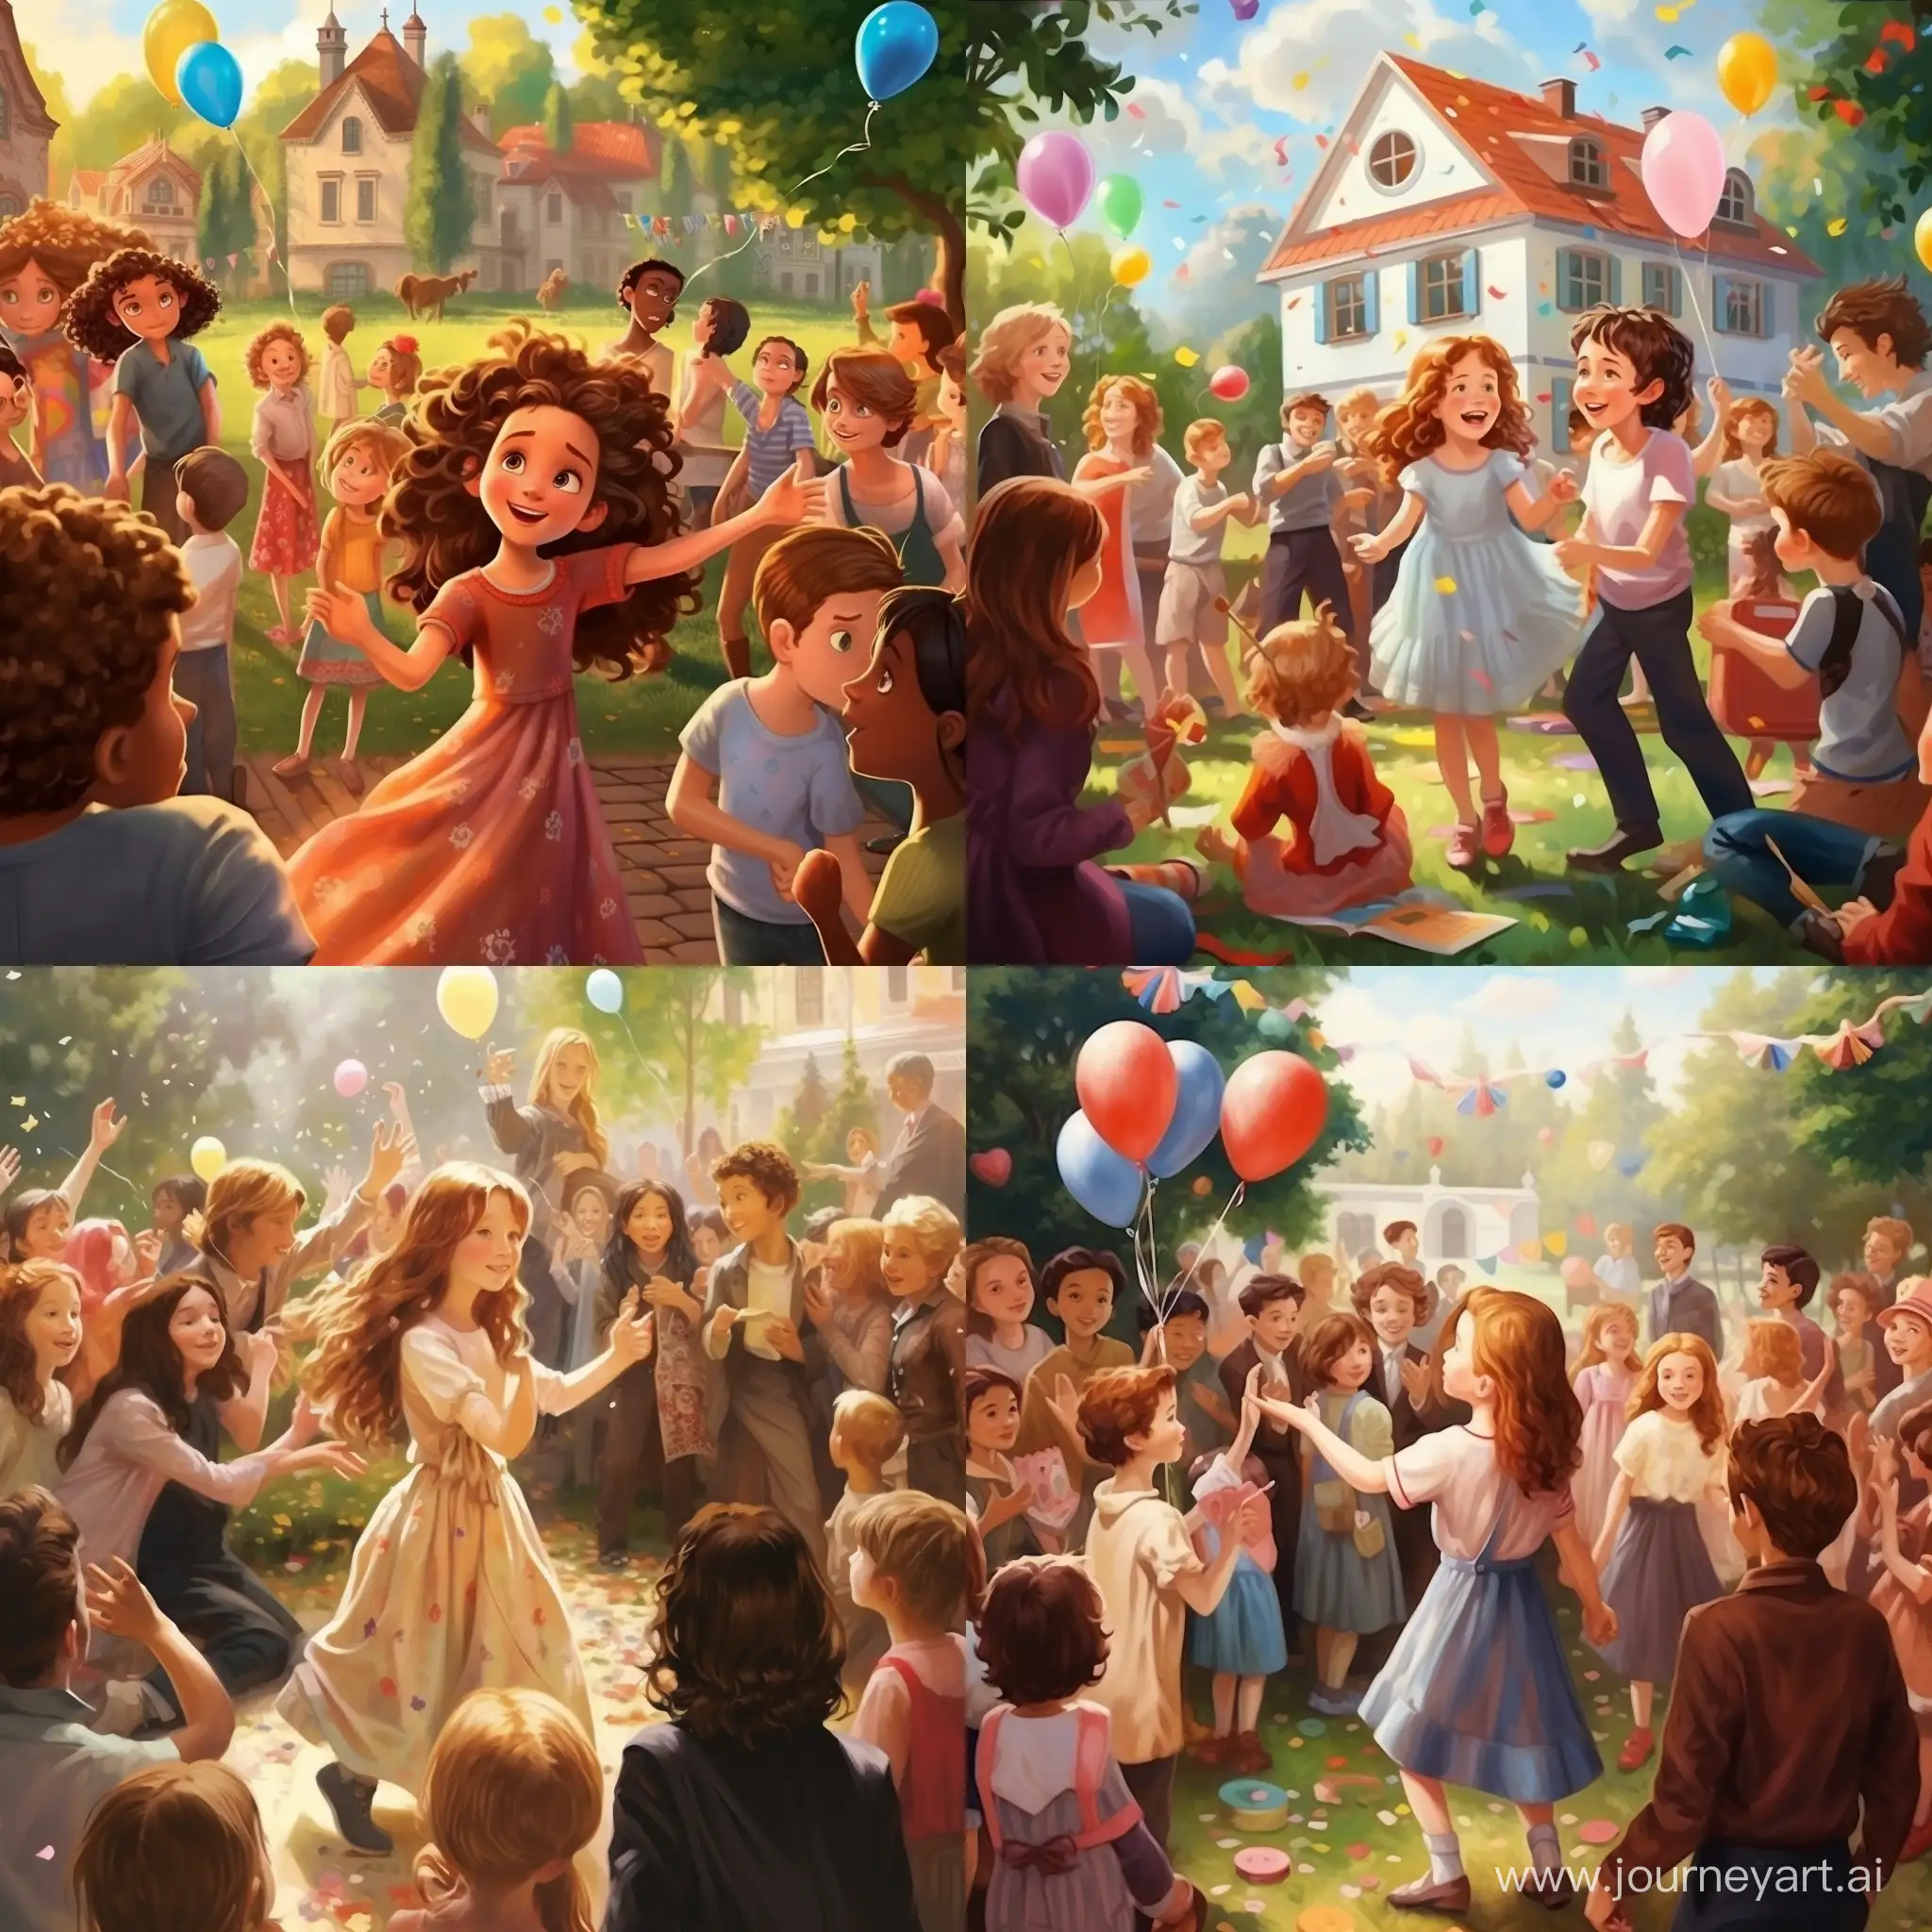 Joyful-Birthday-Celebration-Little-Girl-Dancing-Amidst-the-Crowd-on-the-Lawn